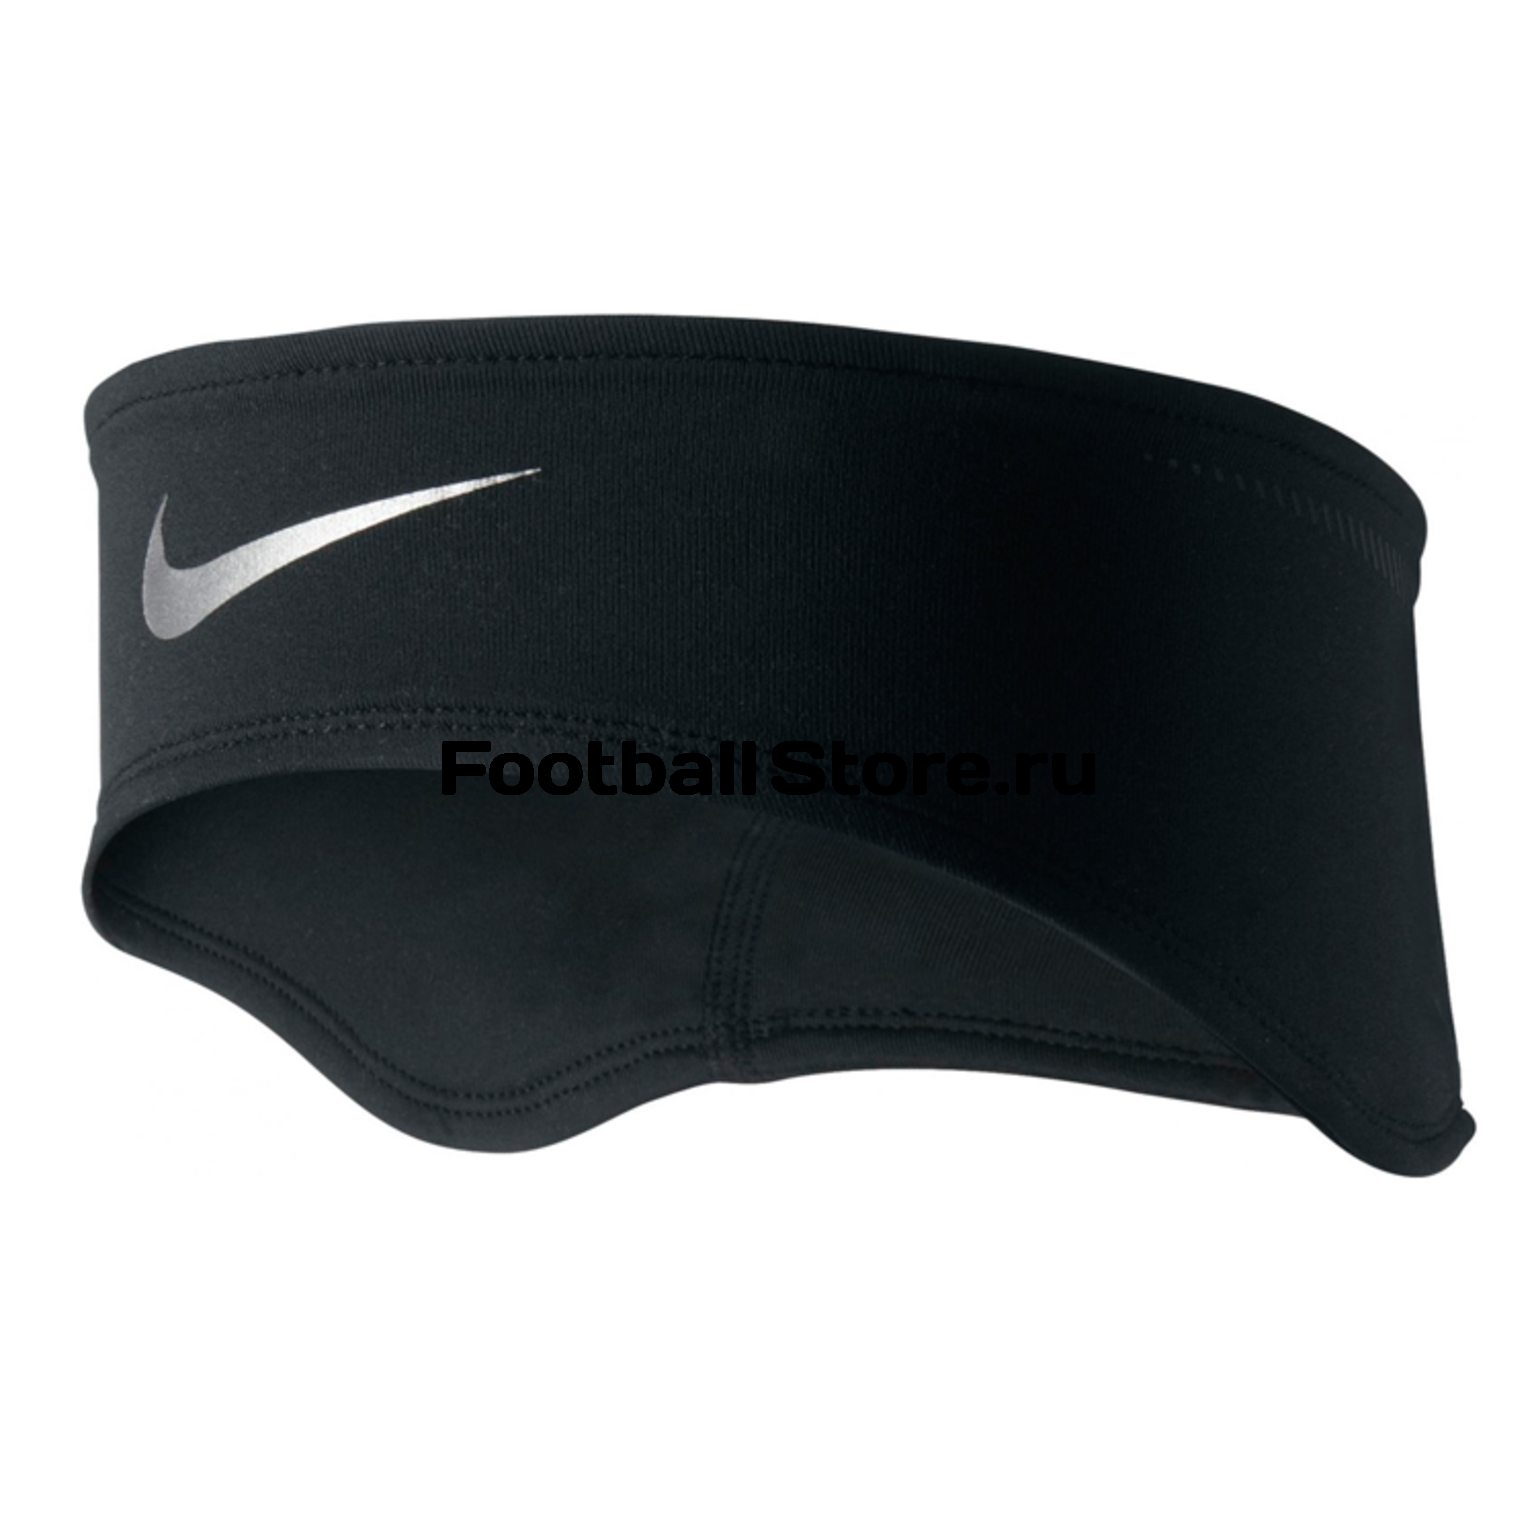 Повязка для головы Nike lightweight running headband